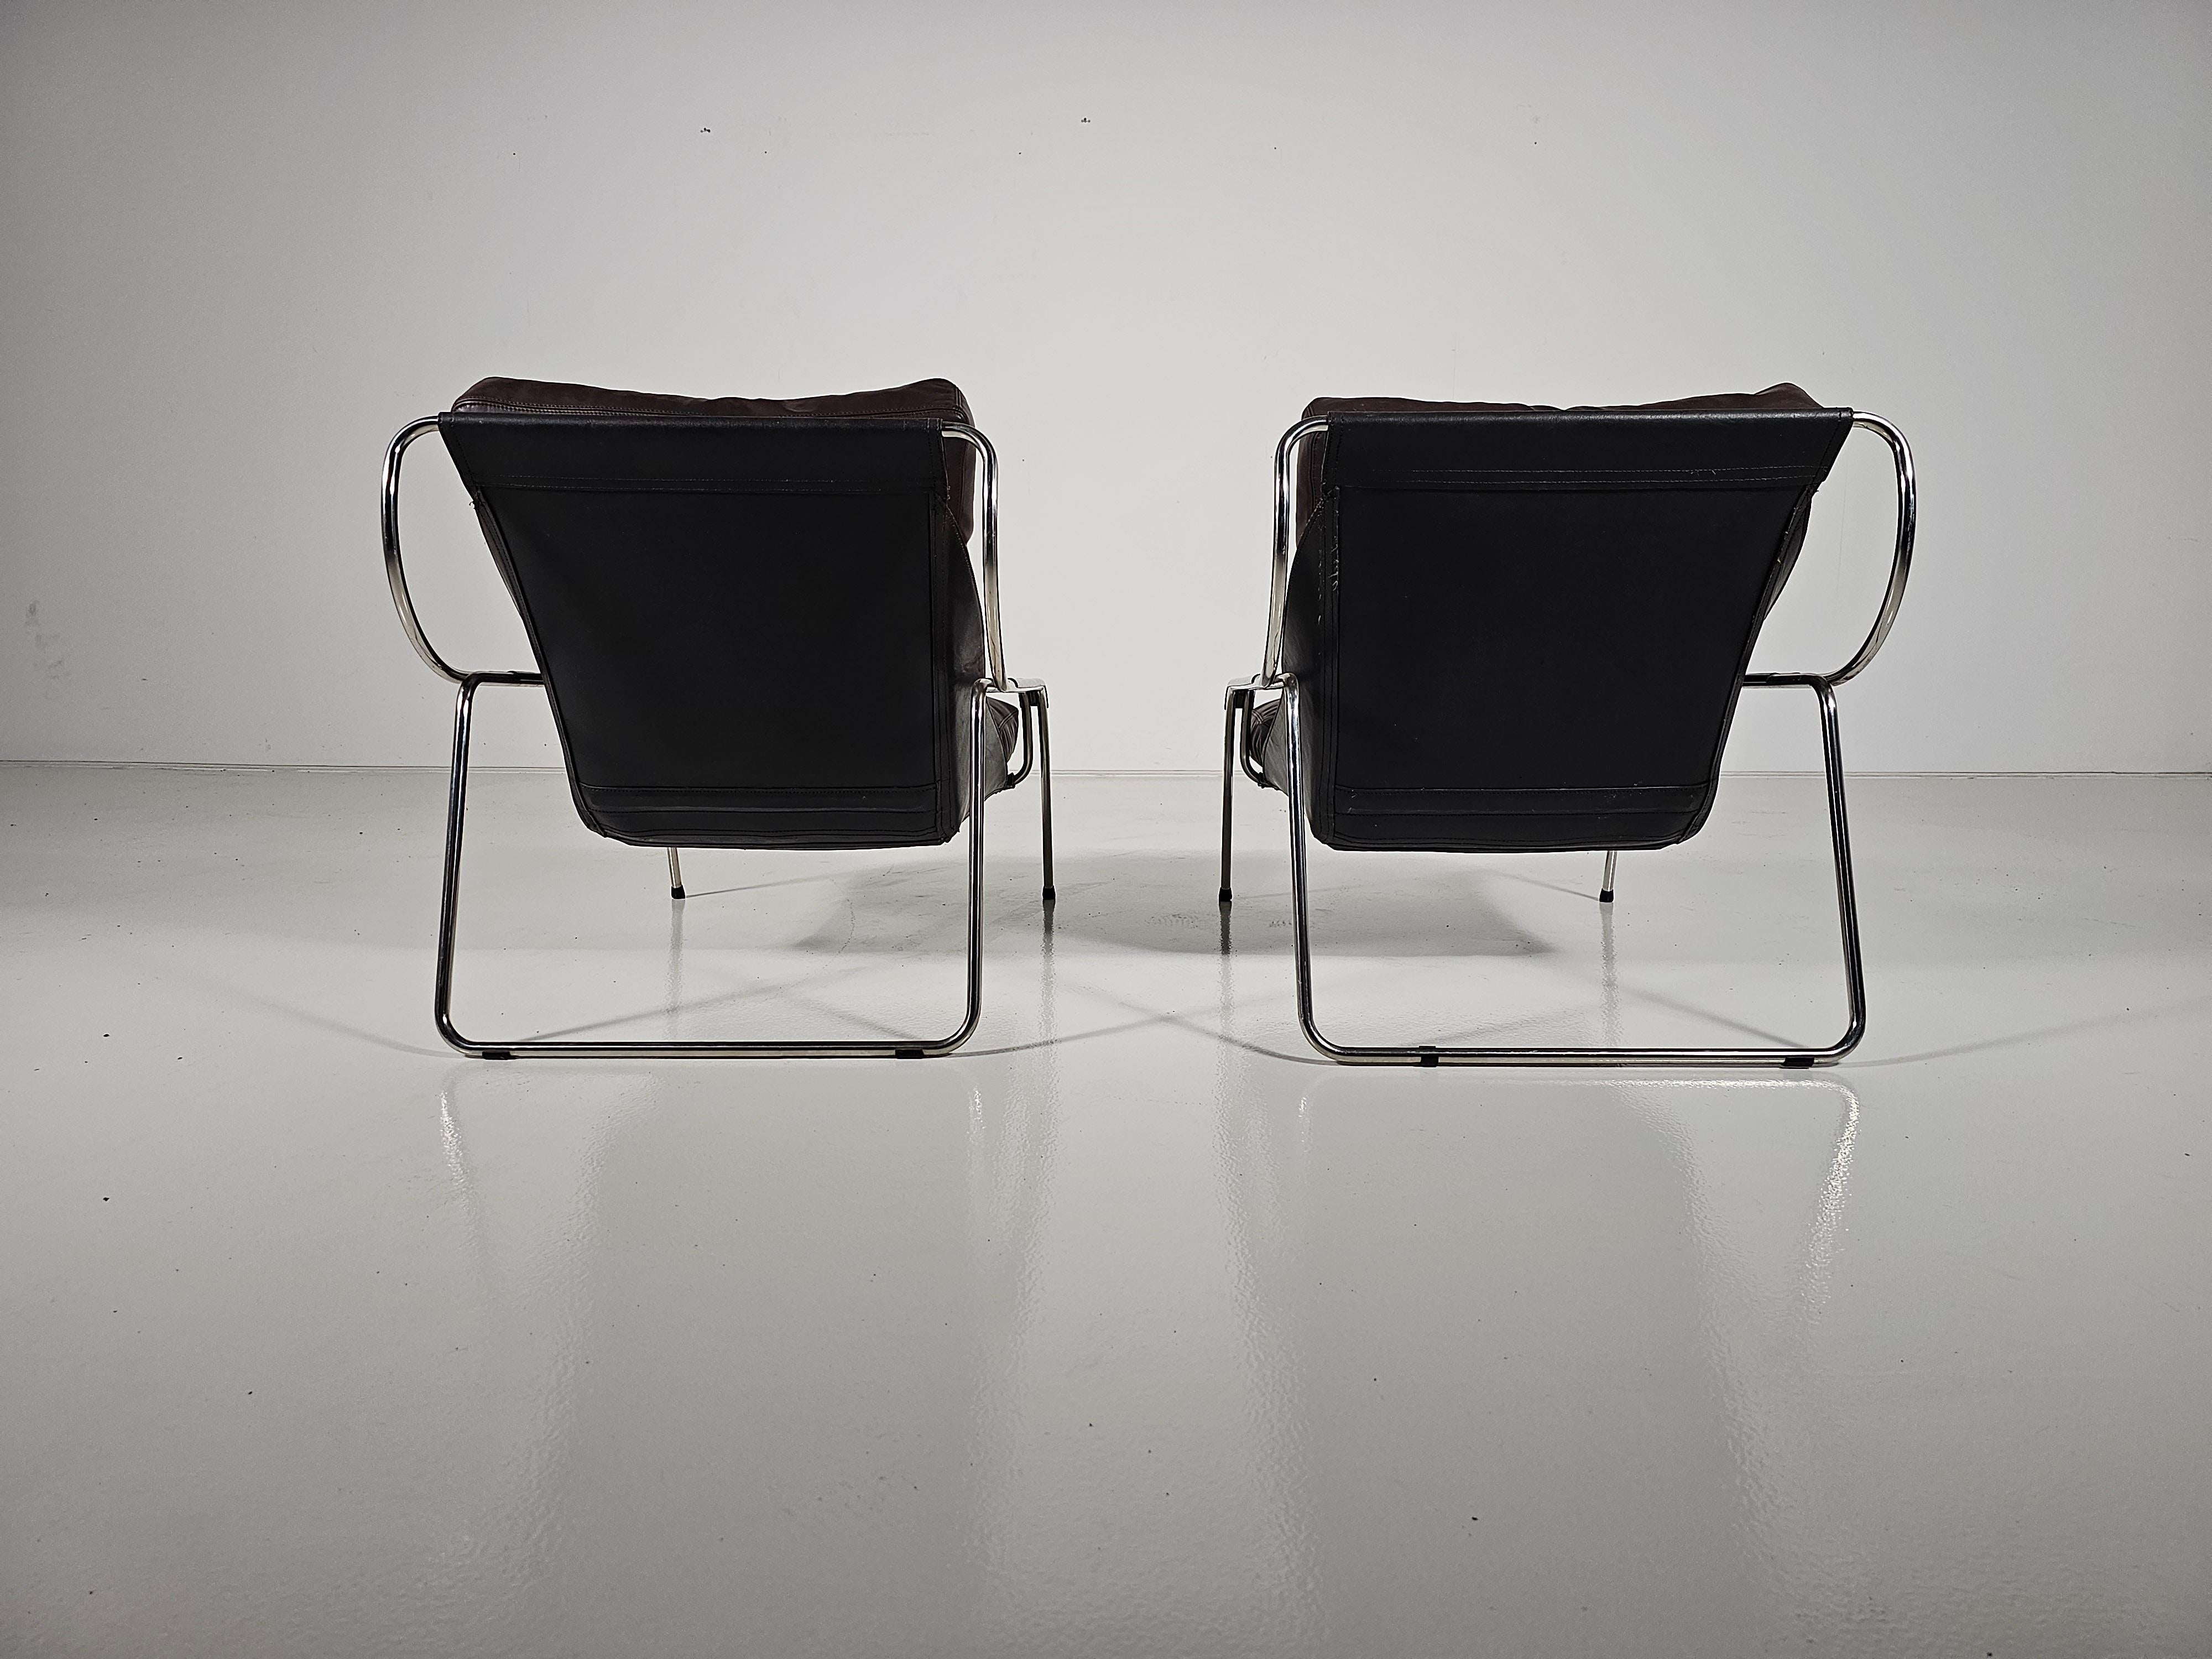 Mid-20th Century  Marco Zanuso Maggiolina lounge chairs in brown and black leather, Zanotta, 1950 For Sale